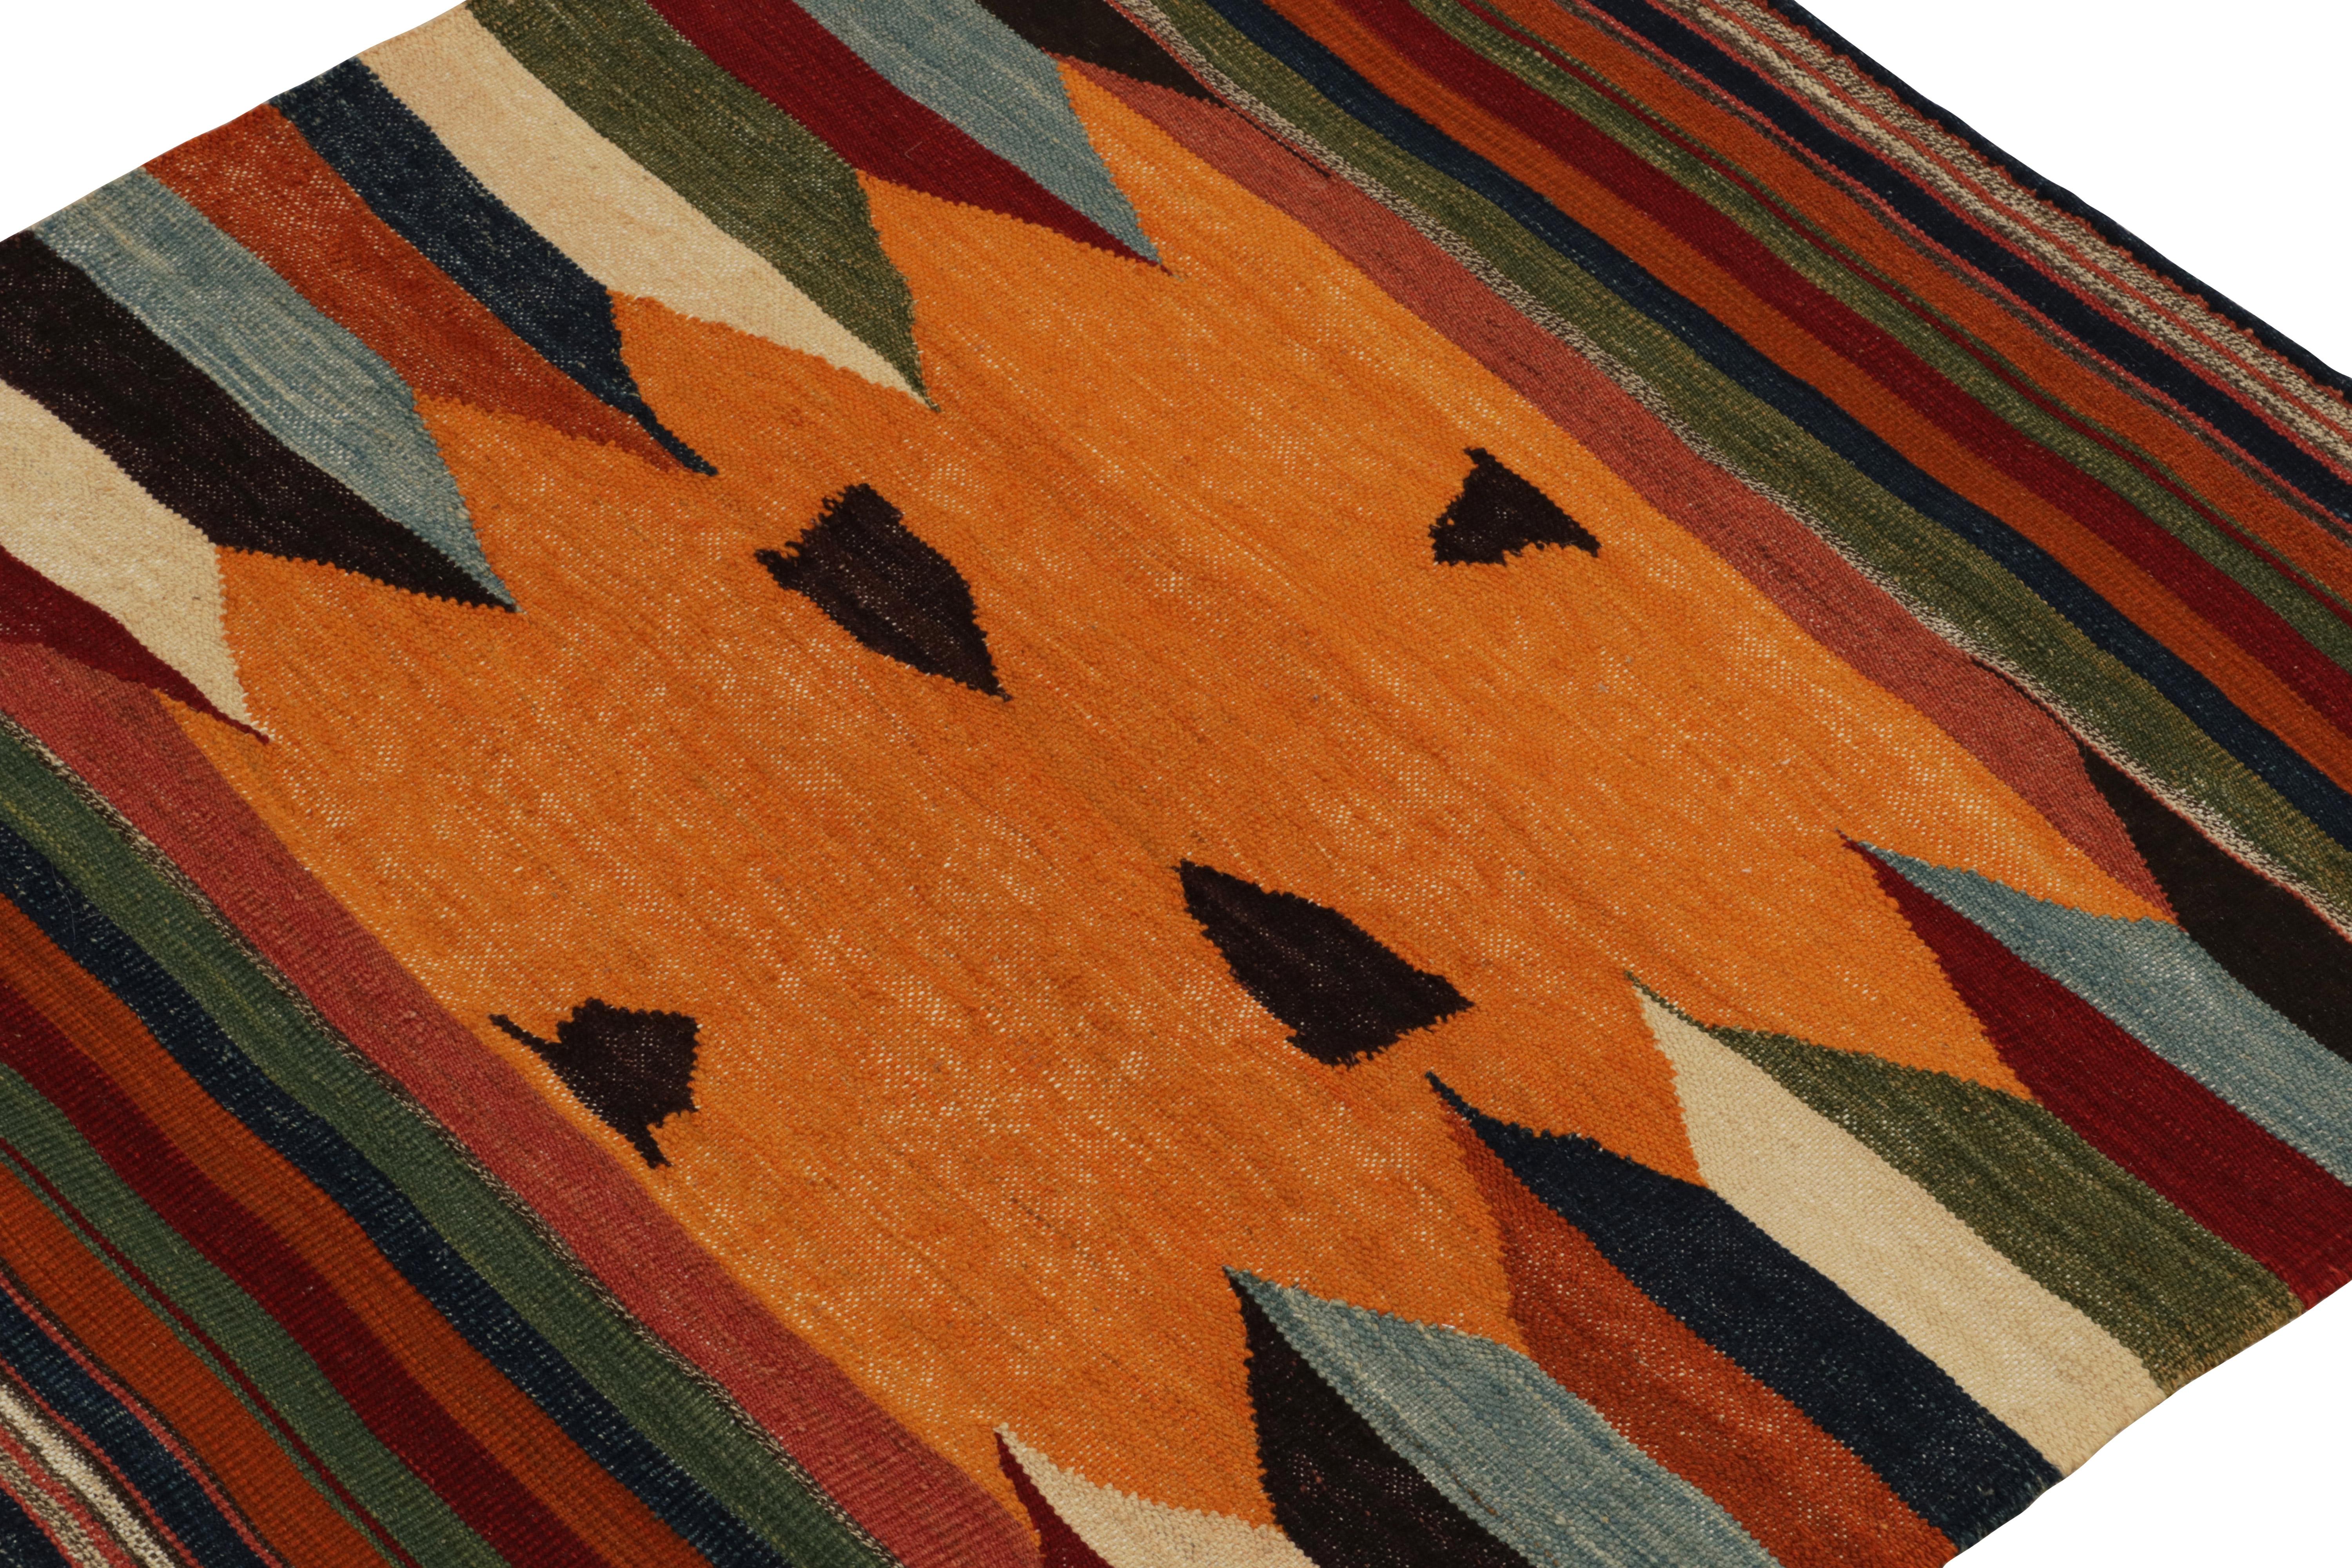 Hand-Knotted 1980s Vintage Sofreh Kilim Rug in Orange Tribal Stripe Patterns by Rug & Kilim For Sale